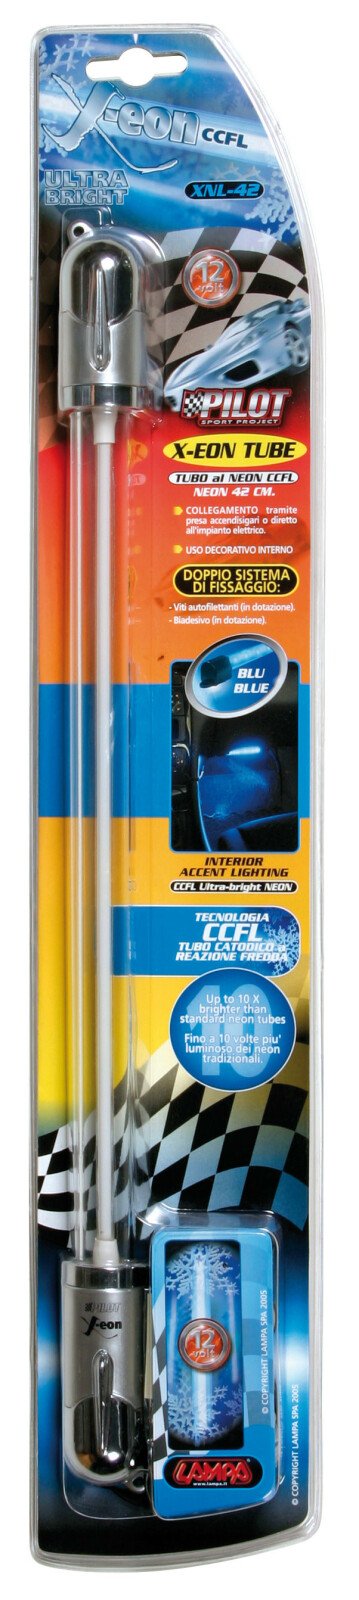 X-Eon colour neon 42cm 12V - Blue thumb